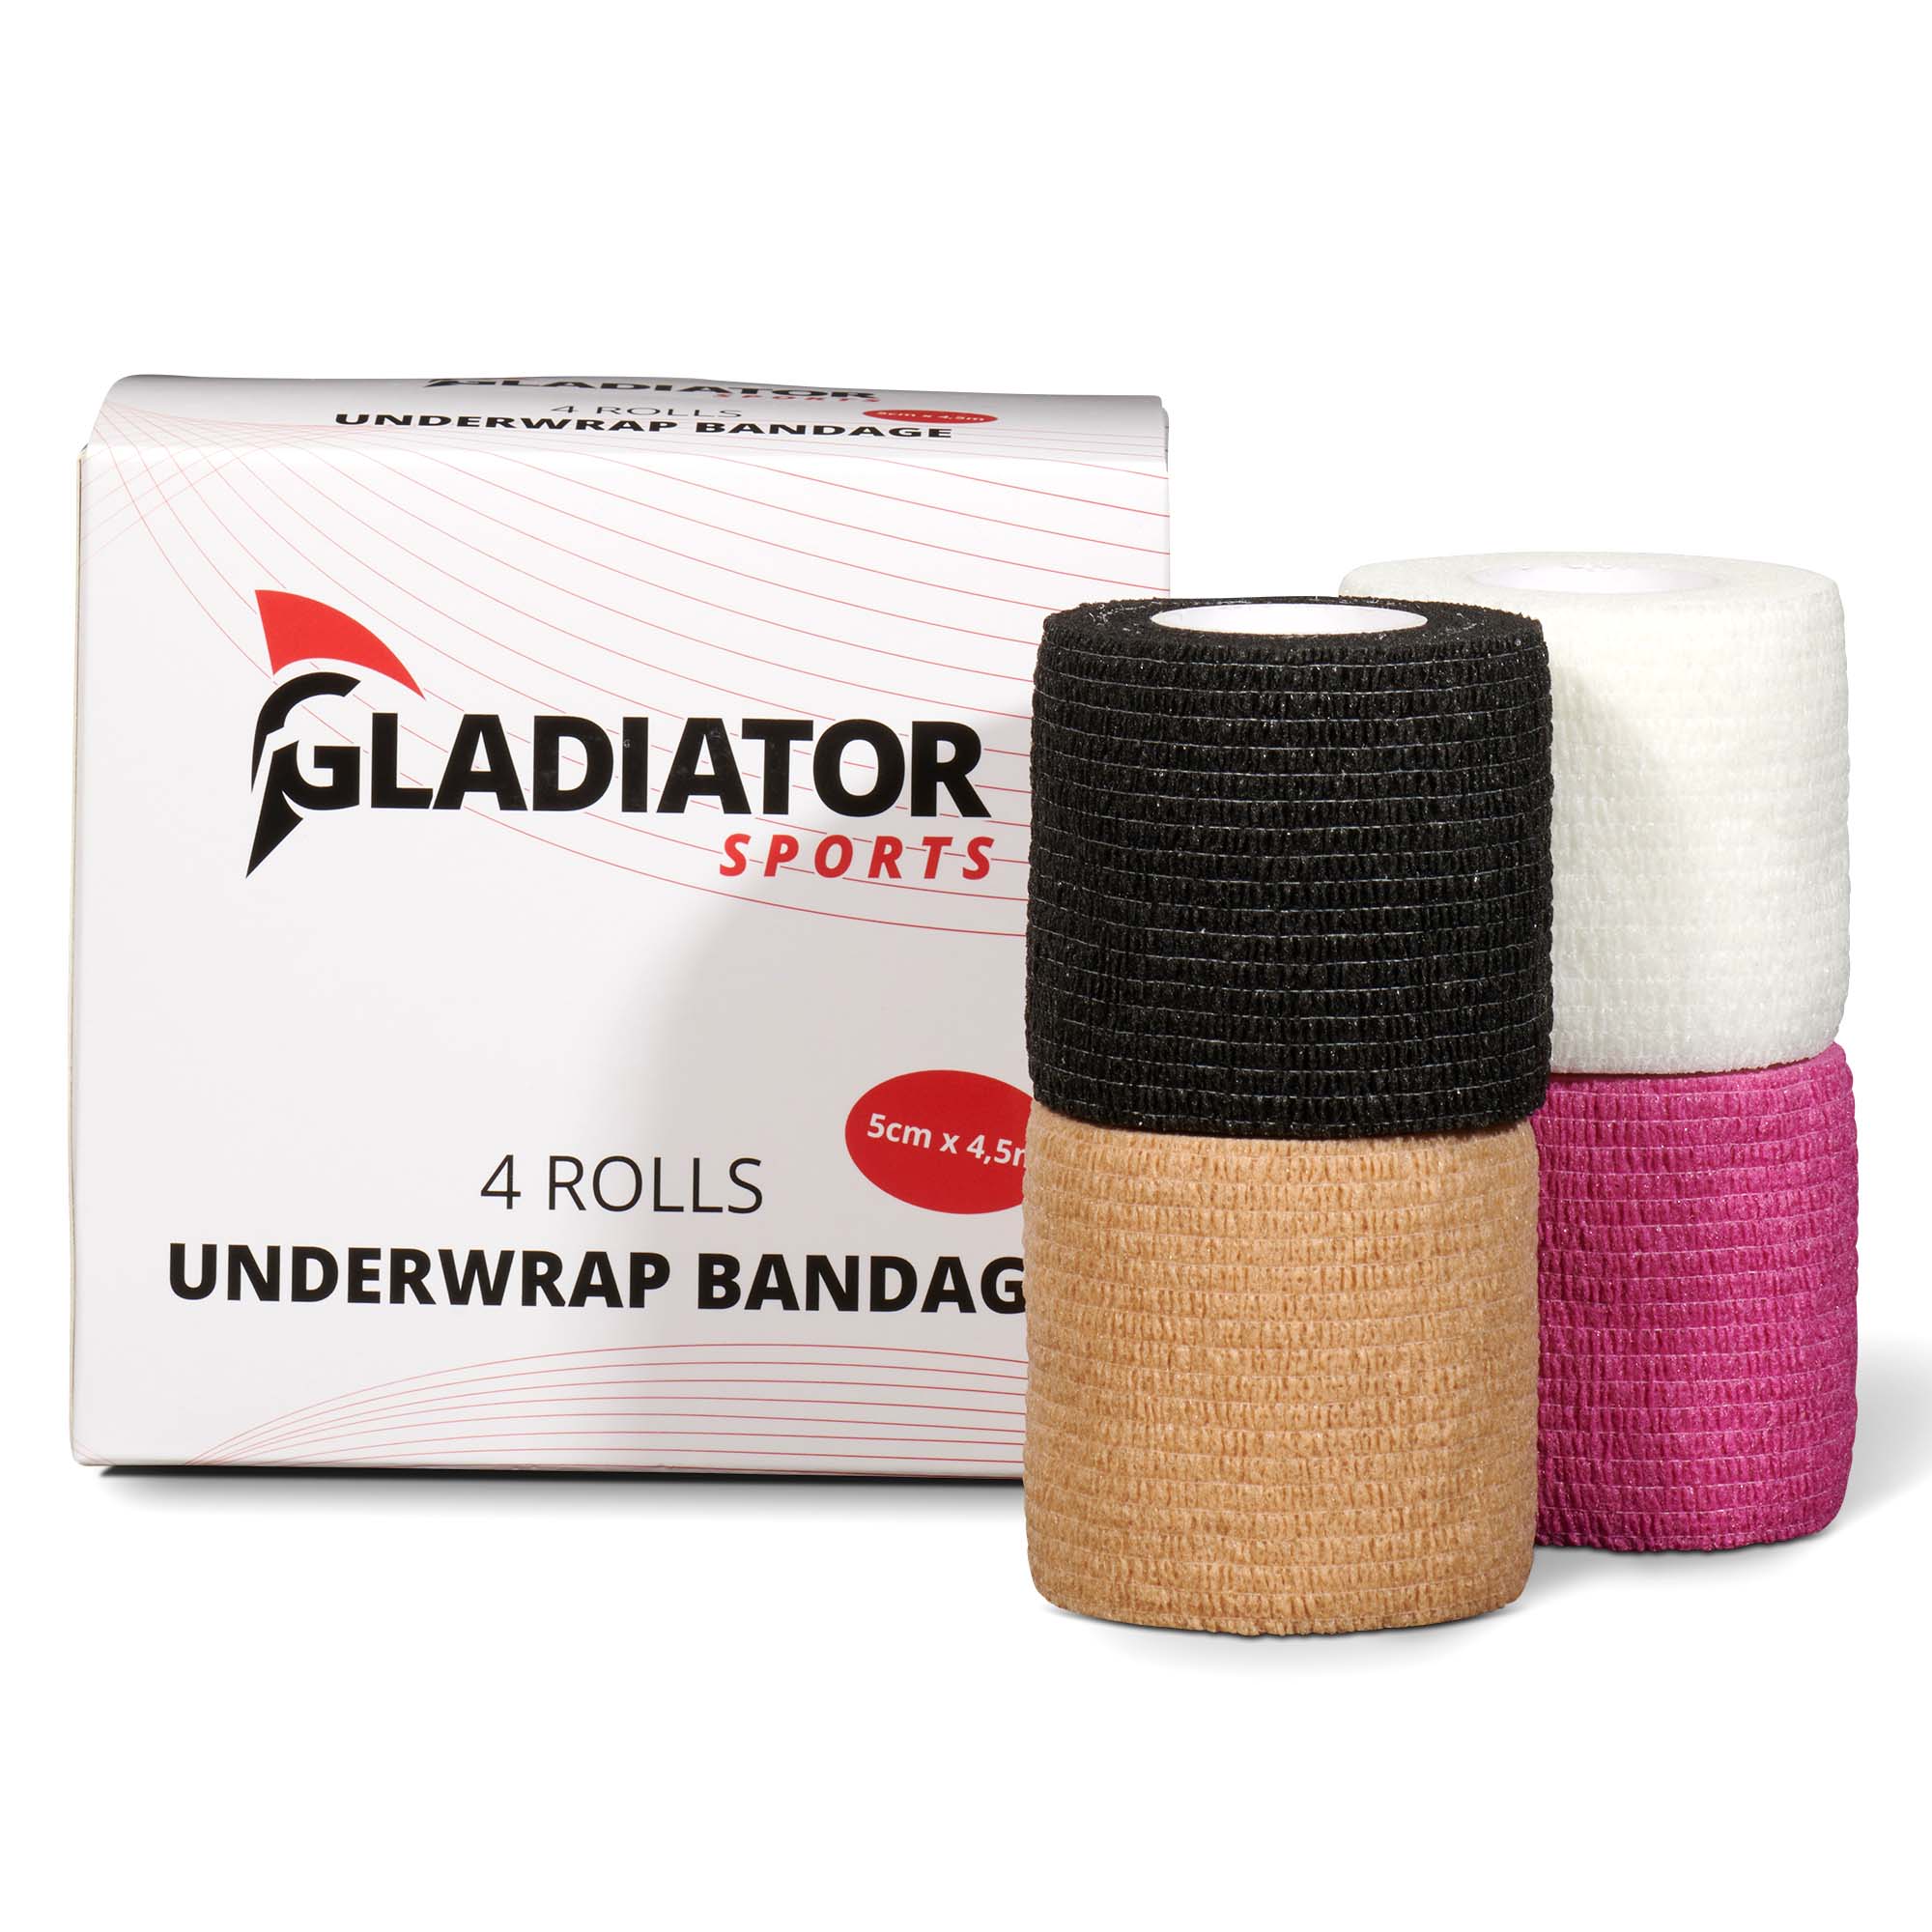 Gladiator Sports underwrap bandage 4 rolls with box for sale